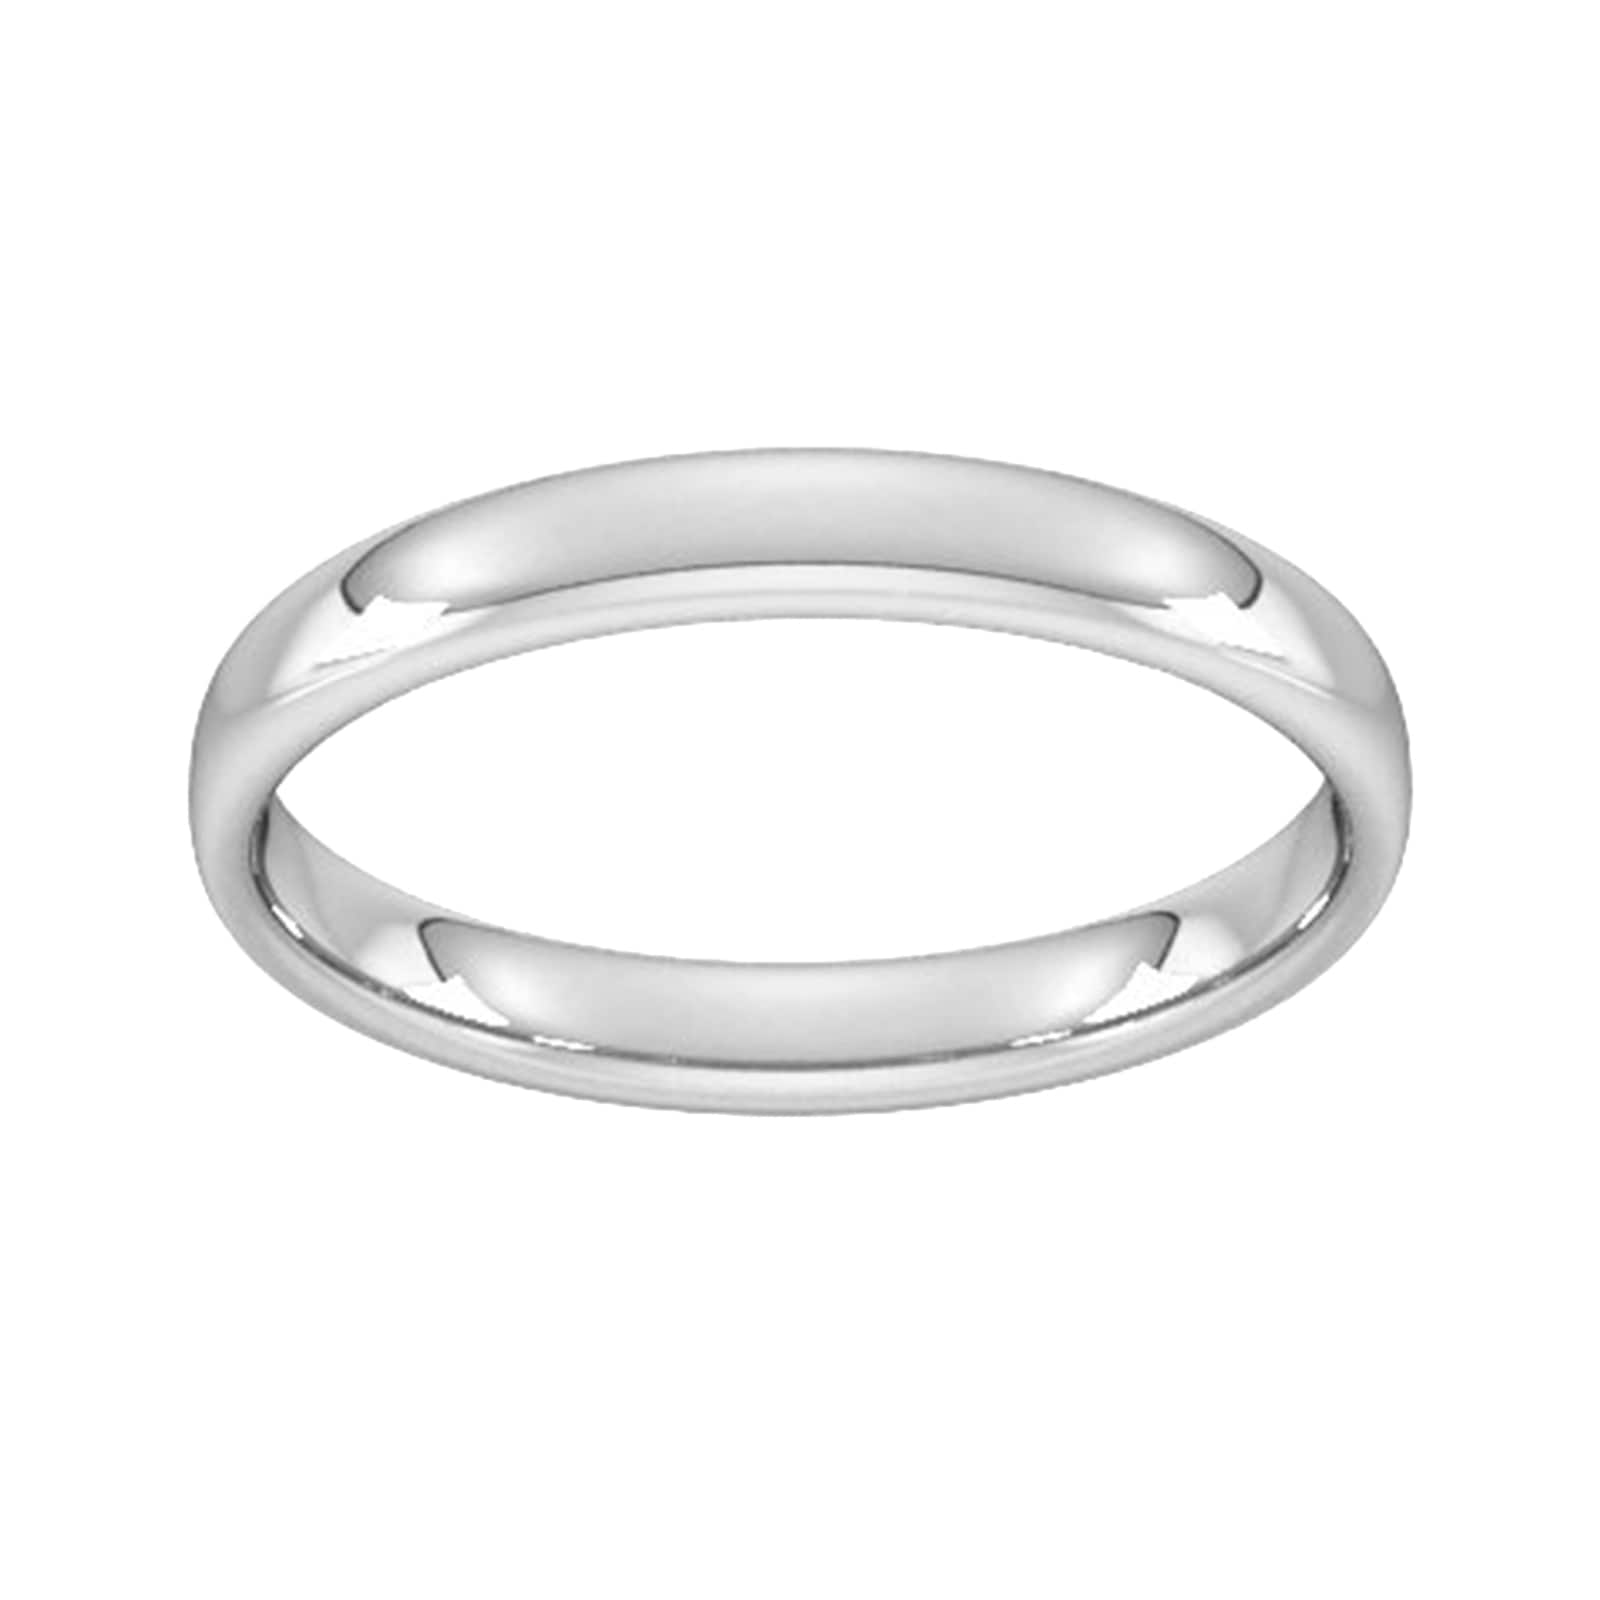 3mm Slight Court Standard Wedding Ring In 18 Carat White Gold - Ring Size K